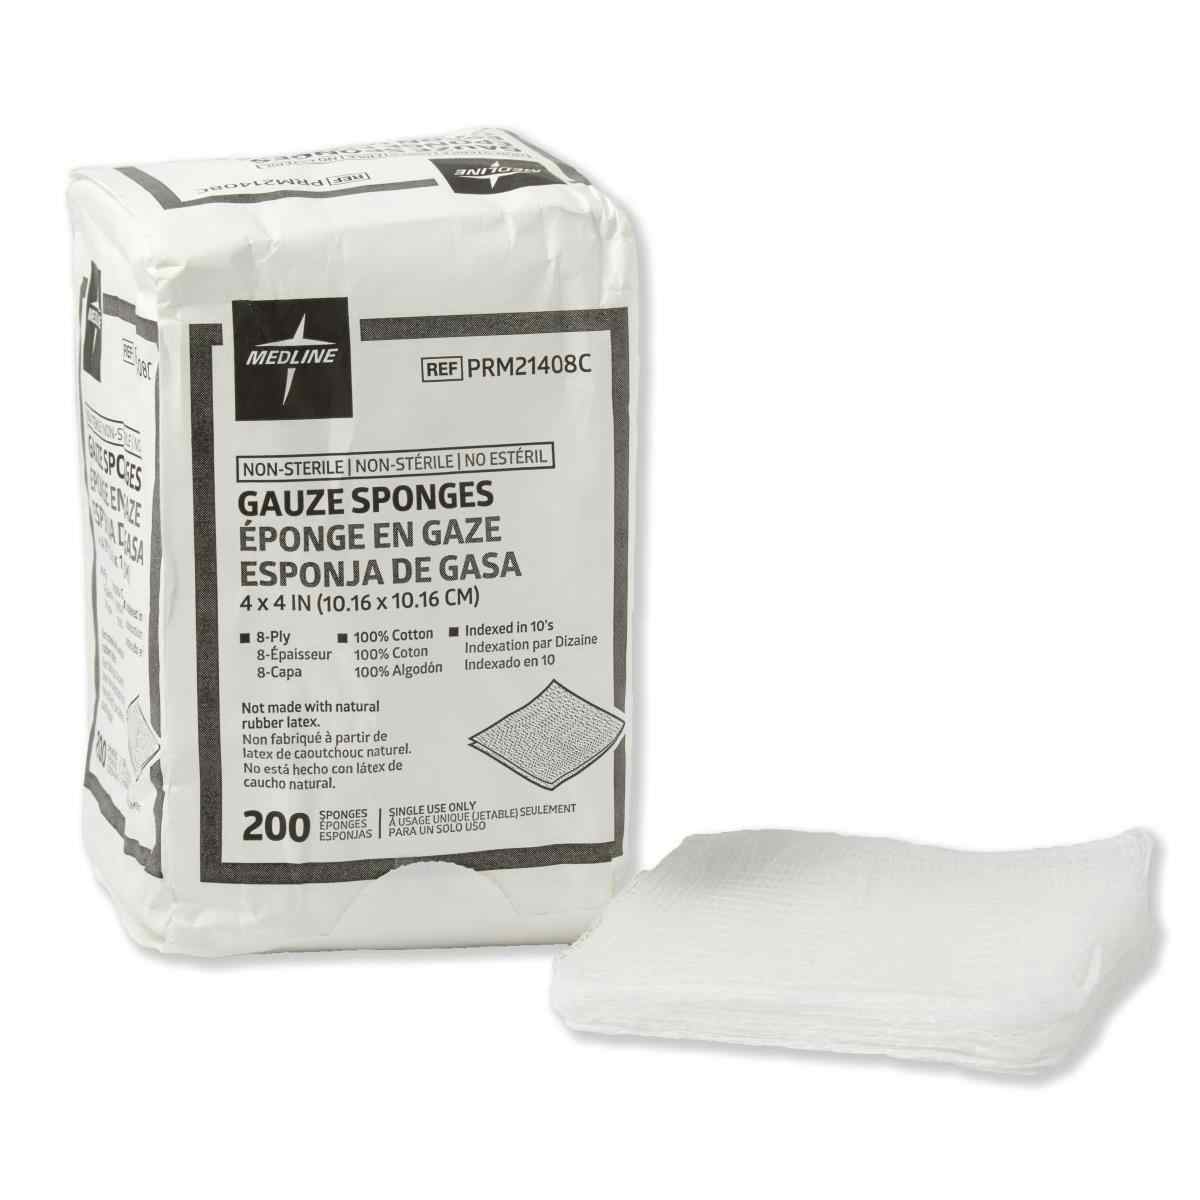 Medline Non-Sterile Woven Cotton 8-Ply Gauze Sponges